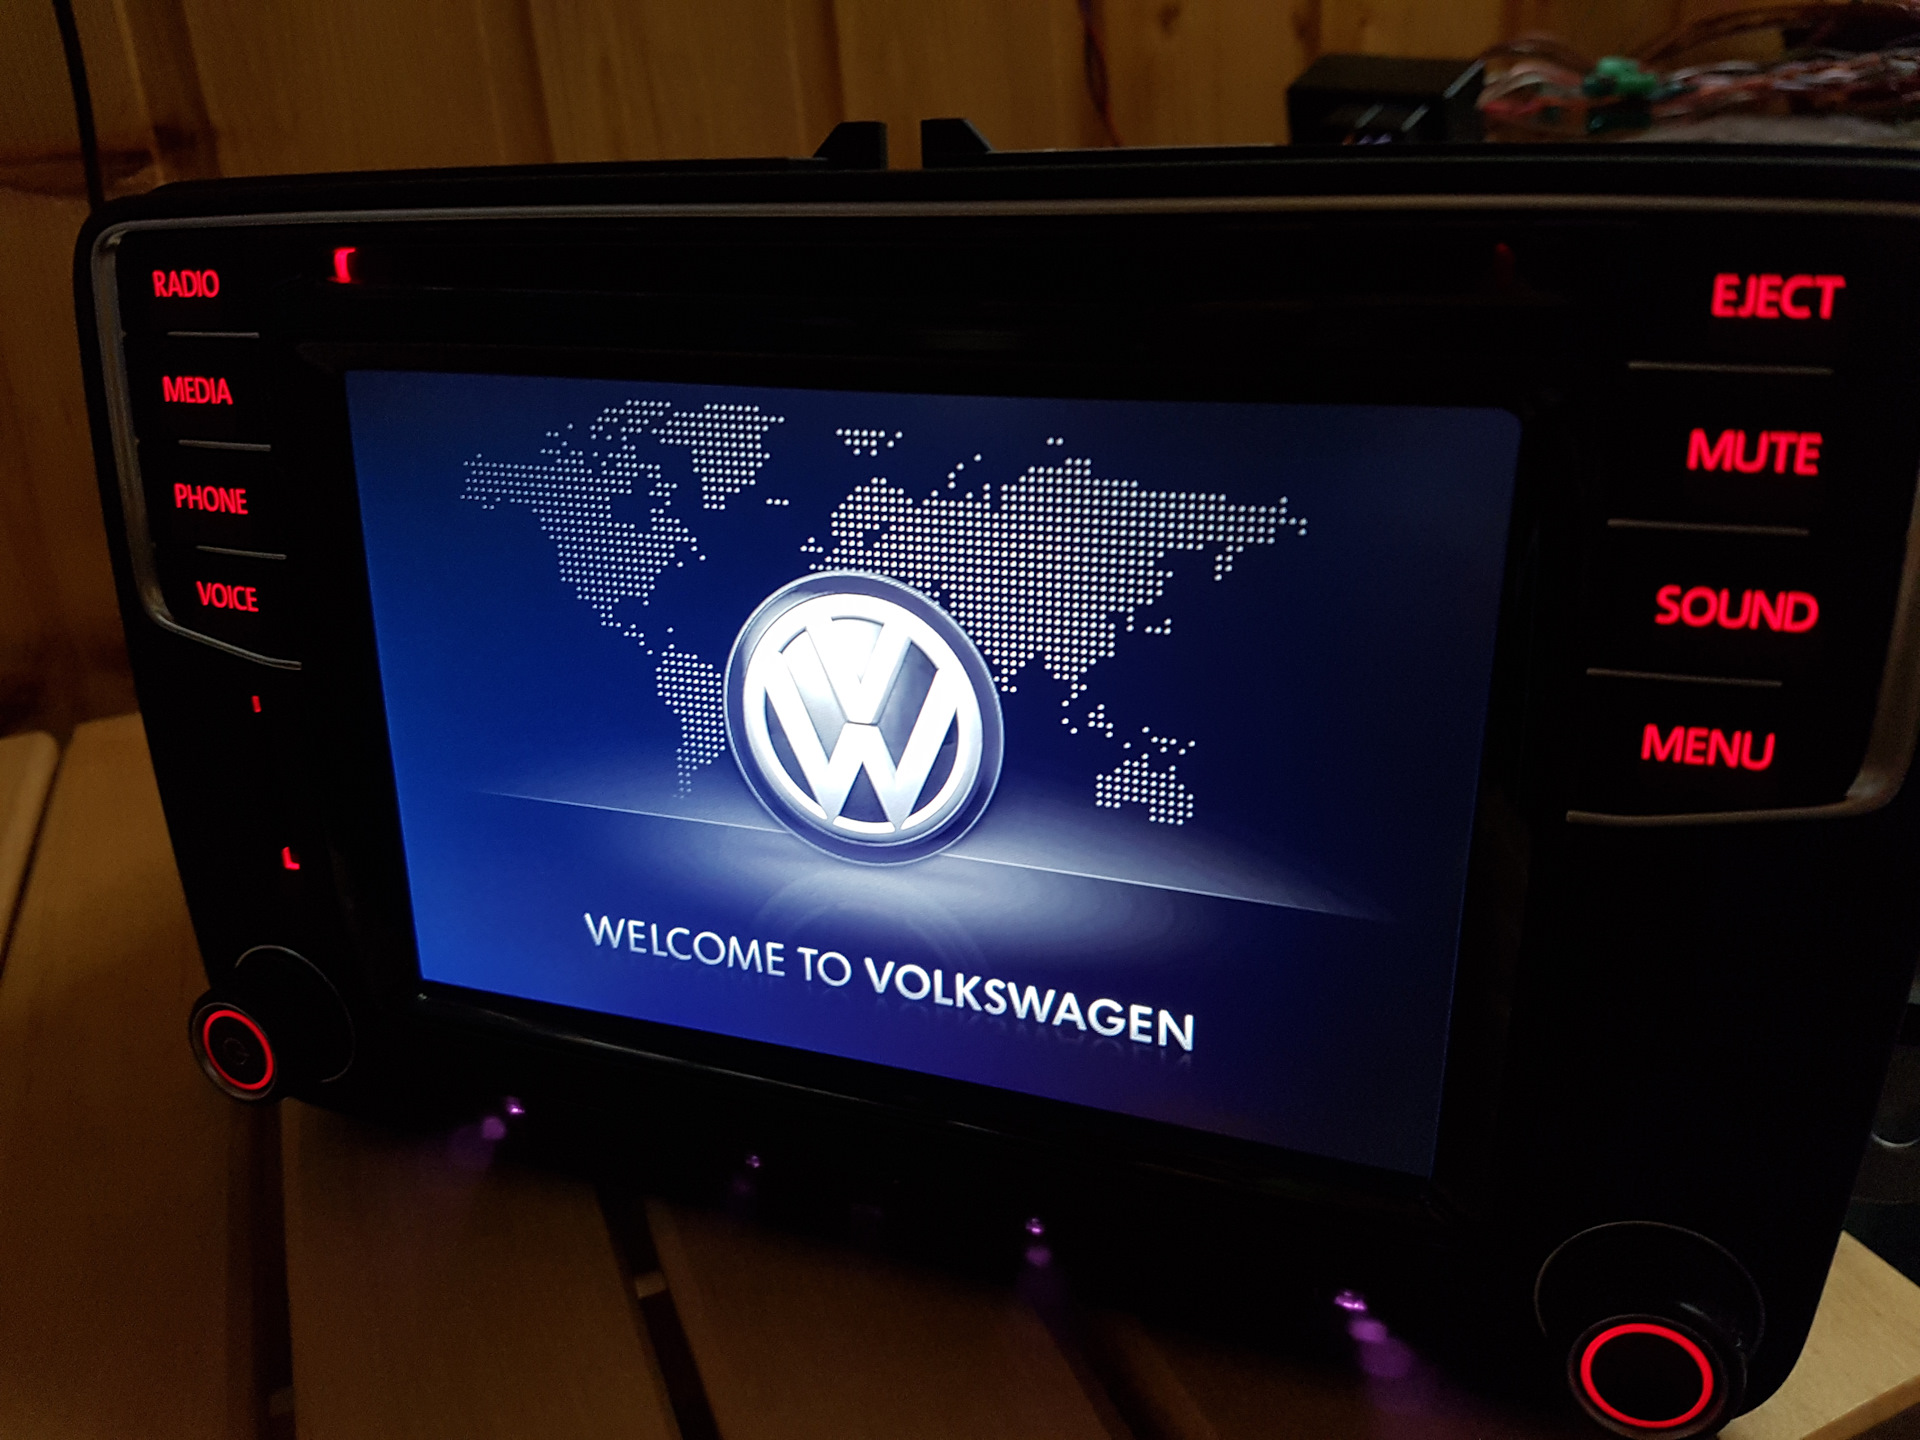 Заставка на экран магнитолы. Заставка на экран магнитолы Renger. Composition Media drive2. Приветствие на дисплее ГУ VW Magotan.